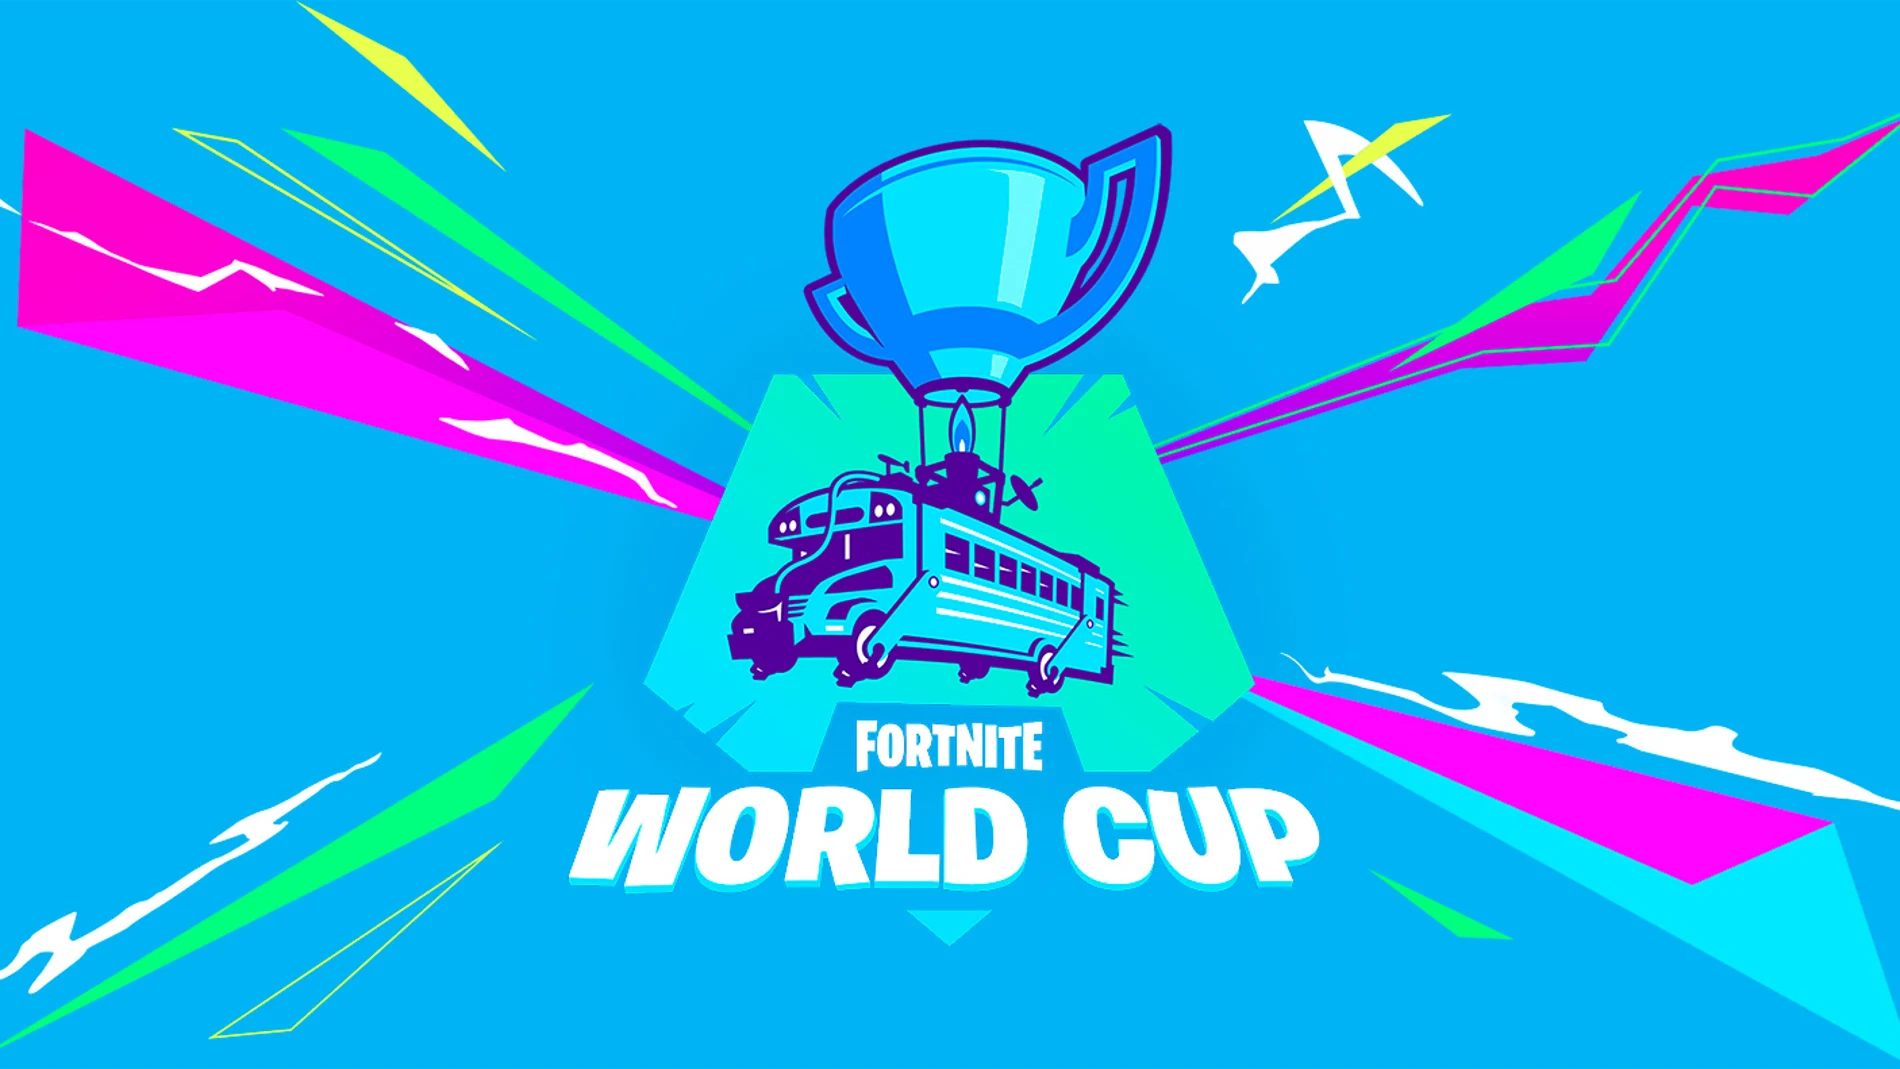 Imagen promocional de la Fortnite World Cup